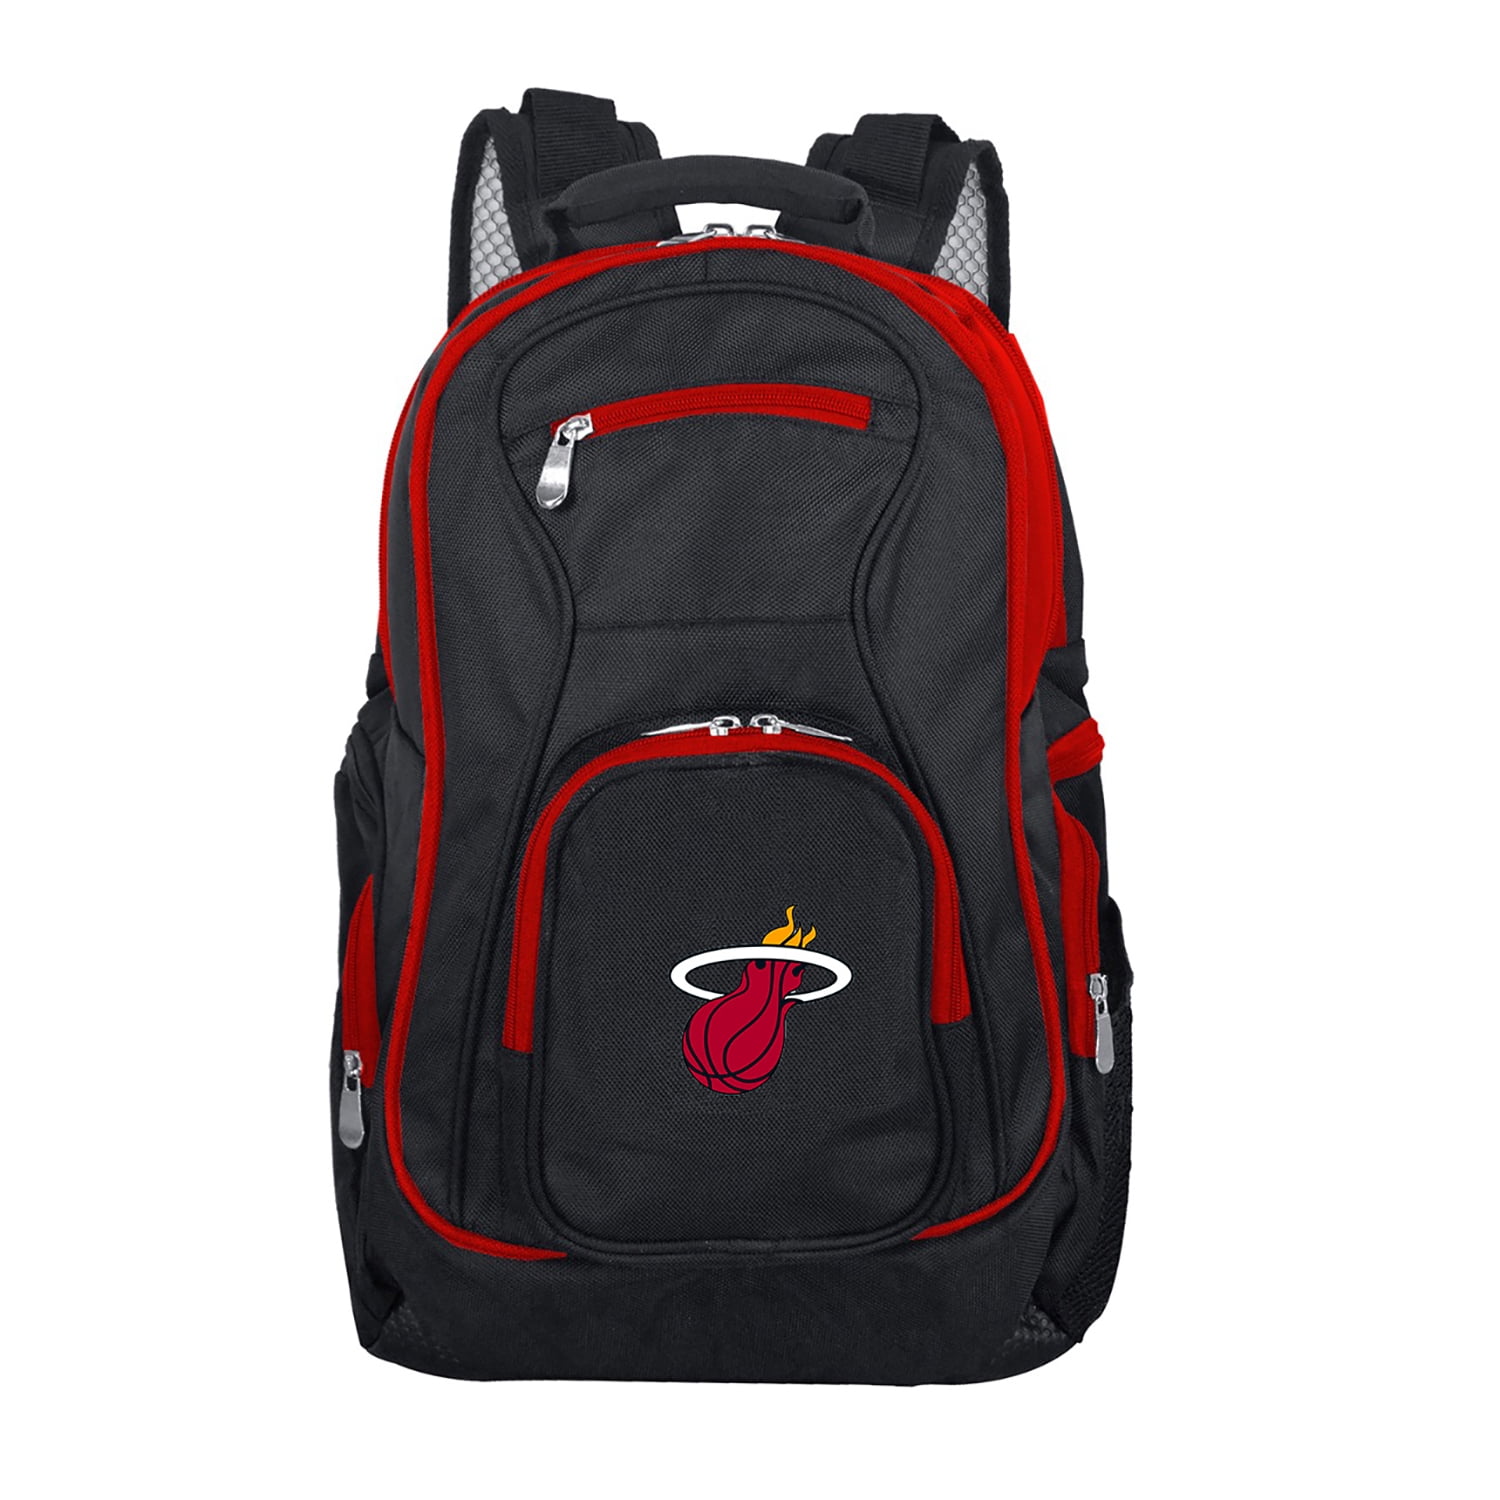 NBA Miami Heat Premium Laptop Backpack with Colored Trim - Walmart.com